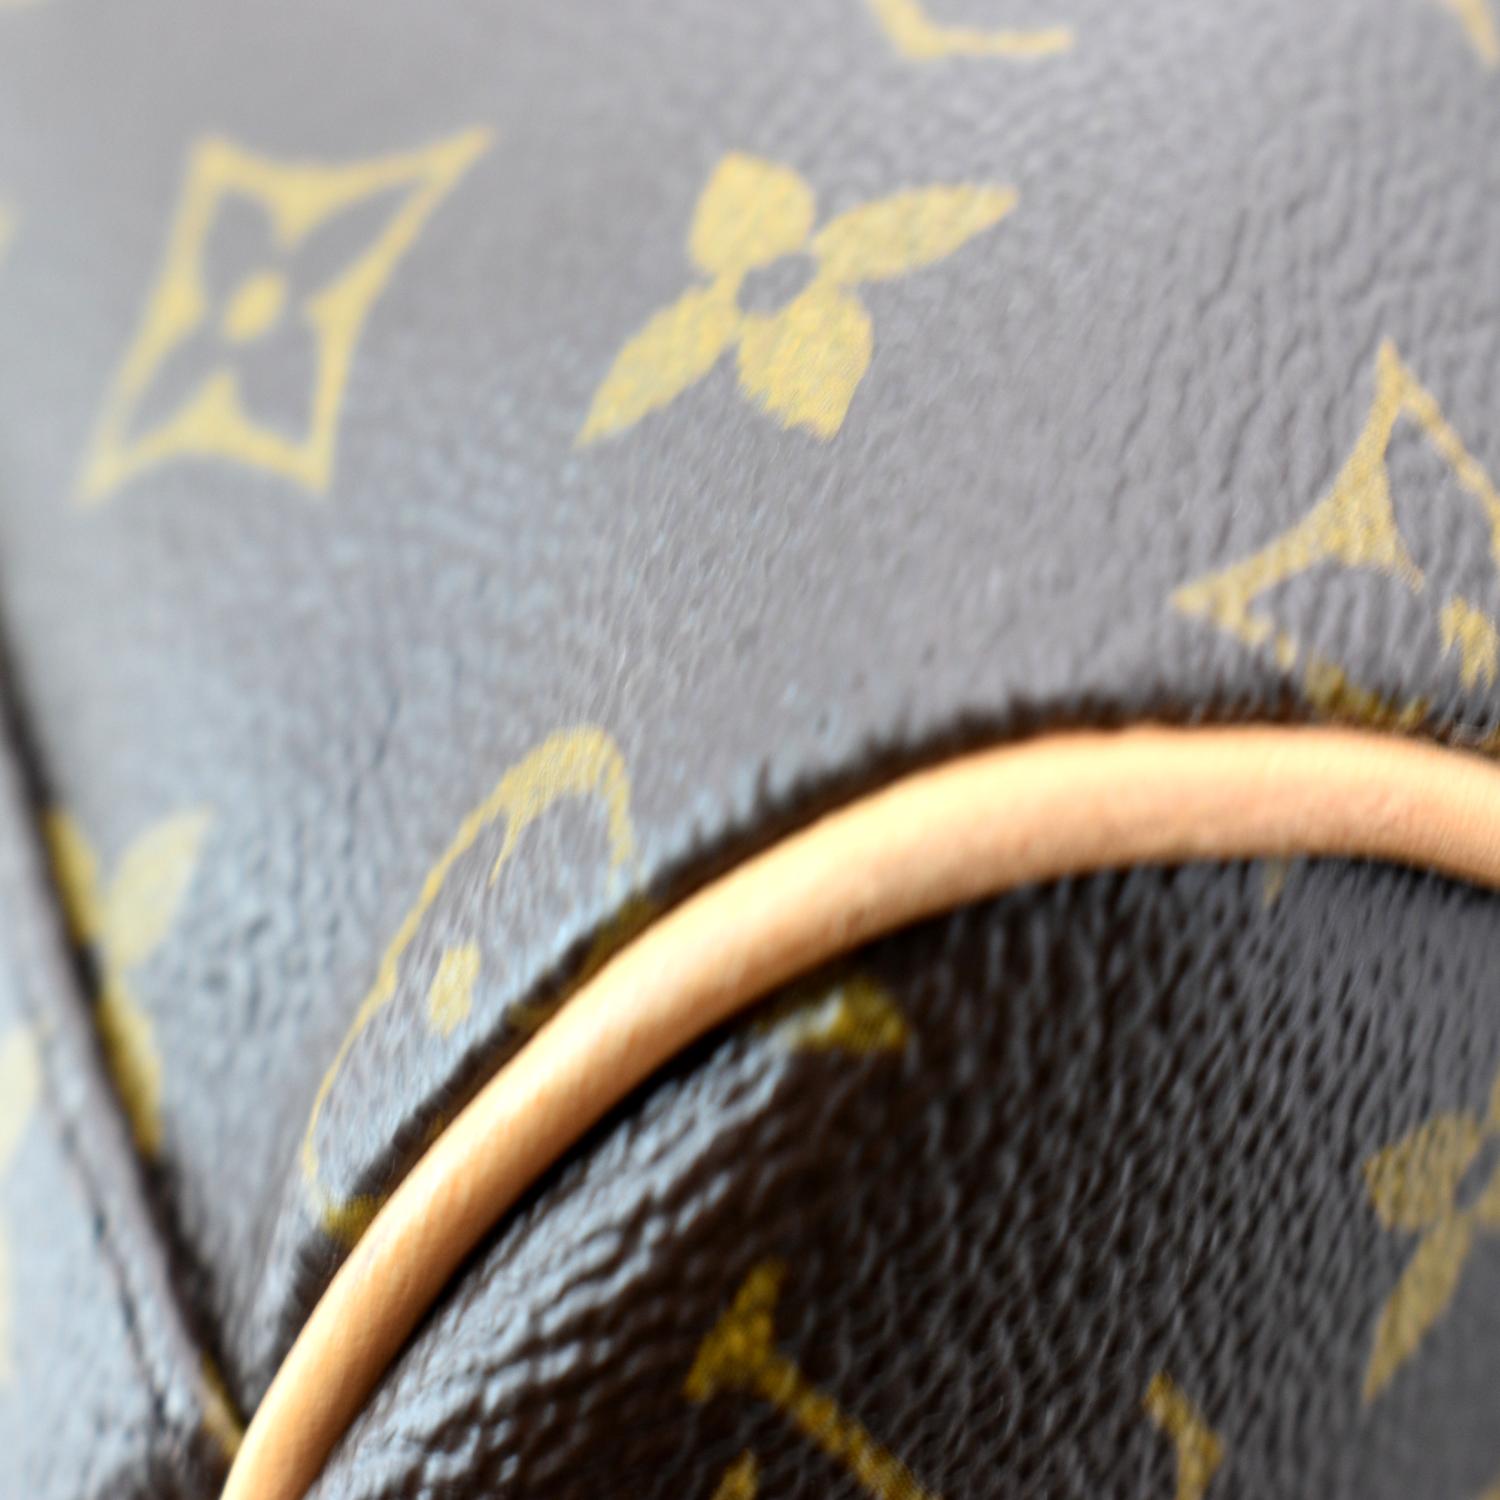 Carry all cloth handbag Louis Vuitton Brown in Cloth - 32570921